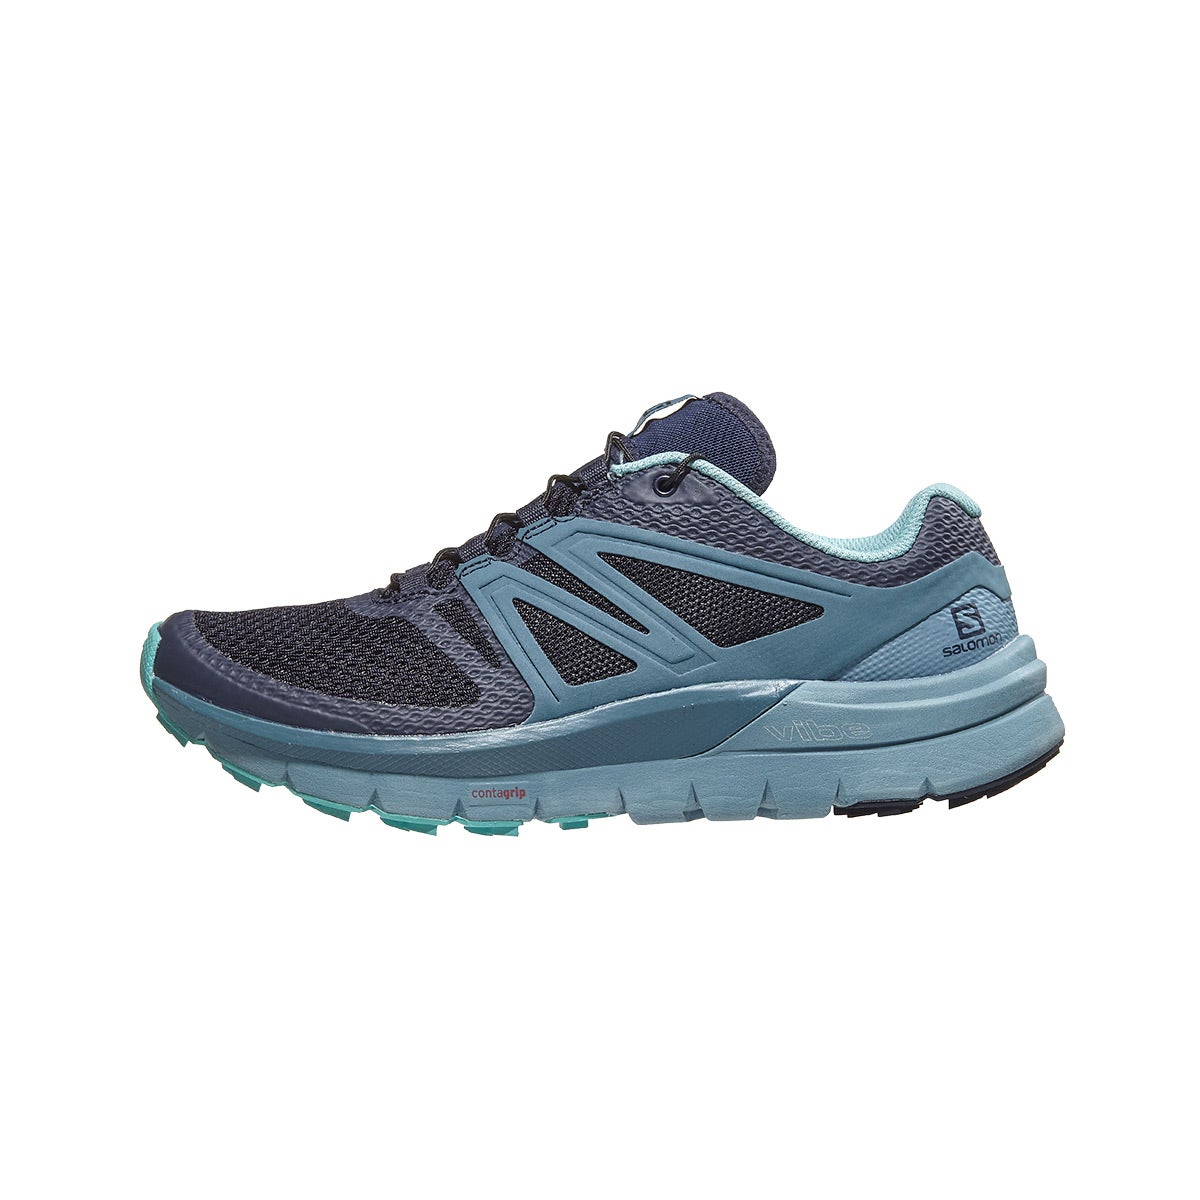 Salomon Sense Max 2 Women's Shoes Navy Blazer/Blue 360° View | Running ...